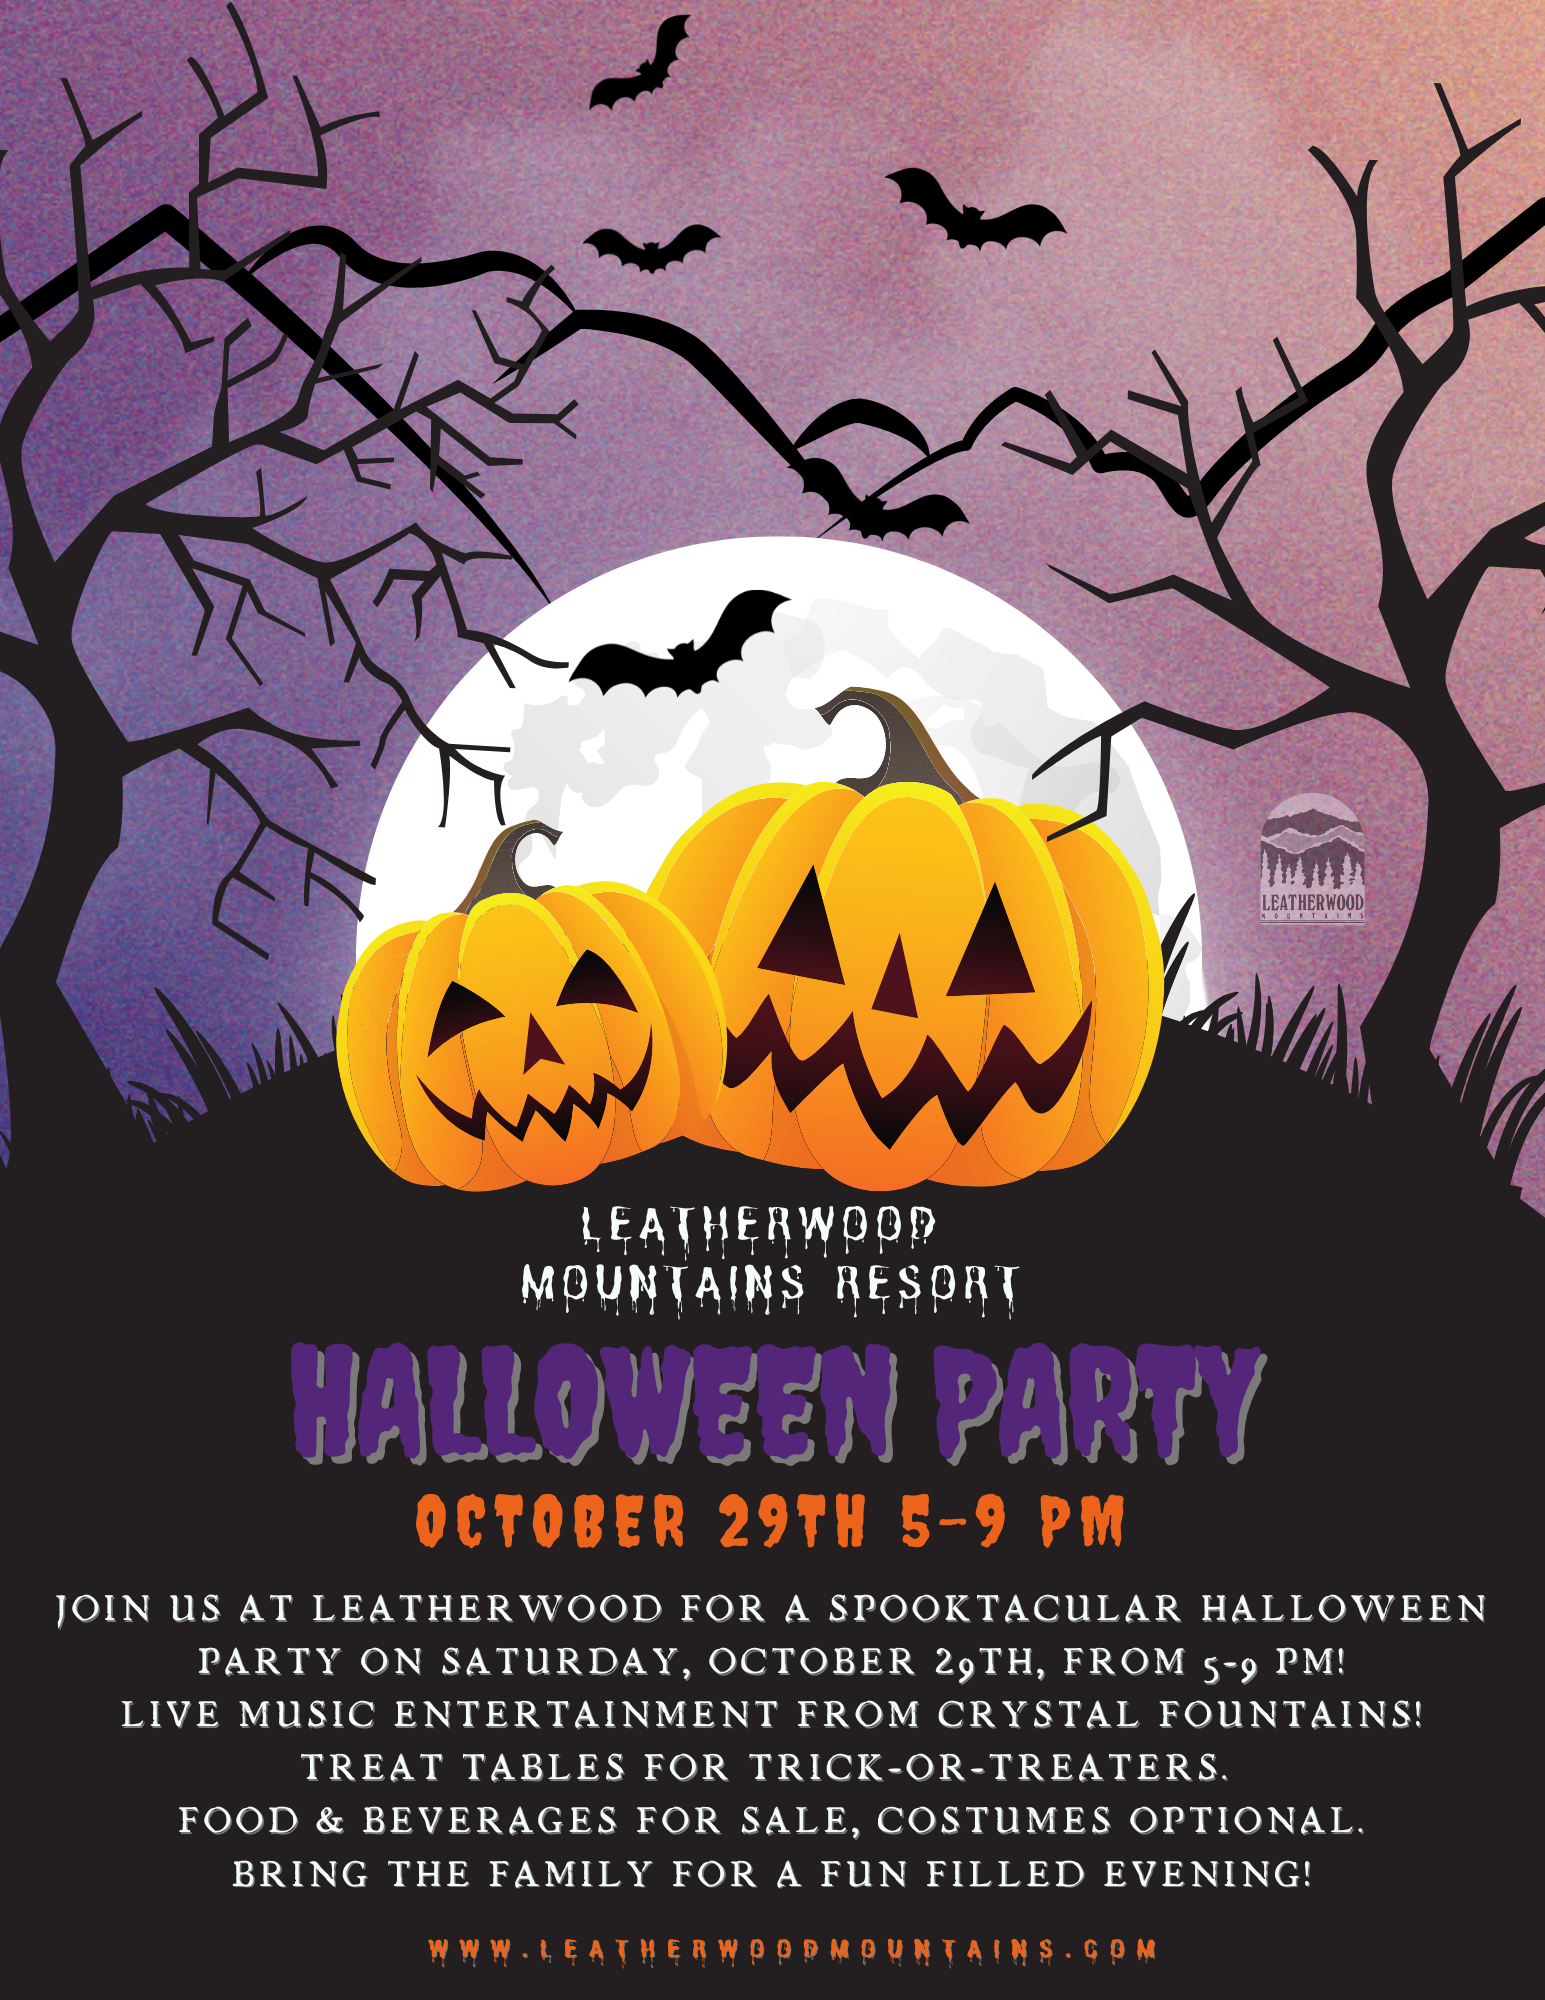 Leatherwood Mountains Halloween Party!